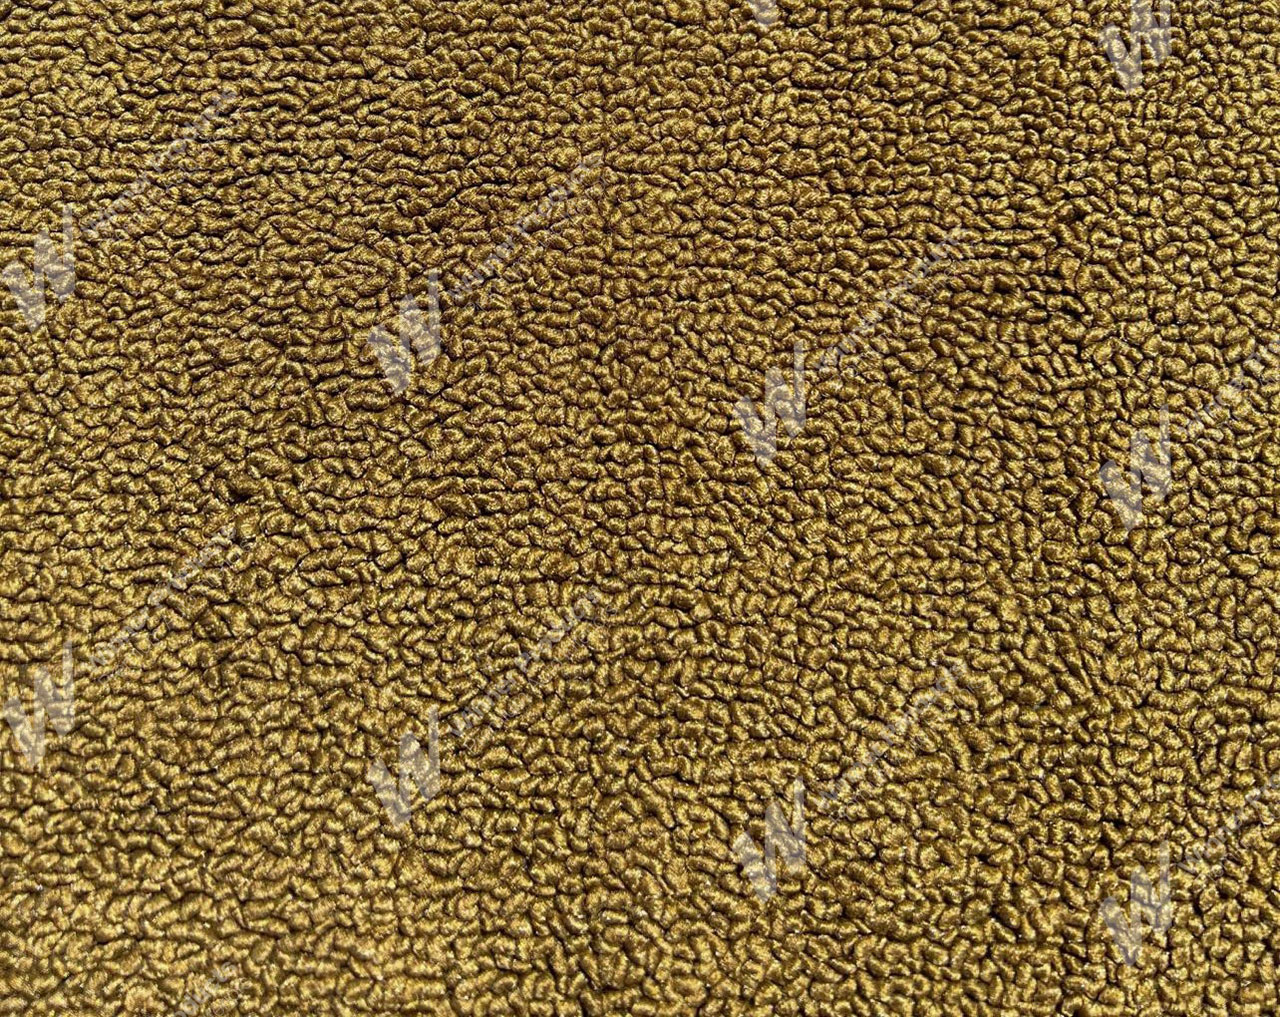 Holden Kingswood HG Kingswood Sedan 11G Antique Gold & Castillion Weave Carpet (Image 1 of 1)